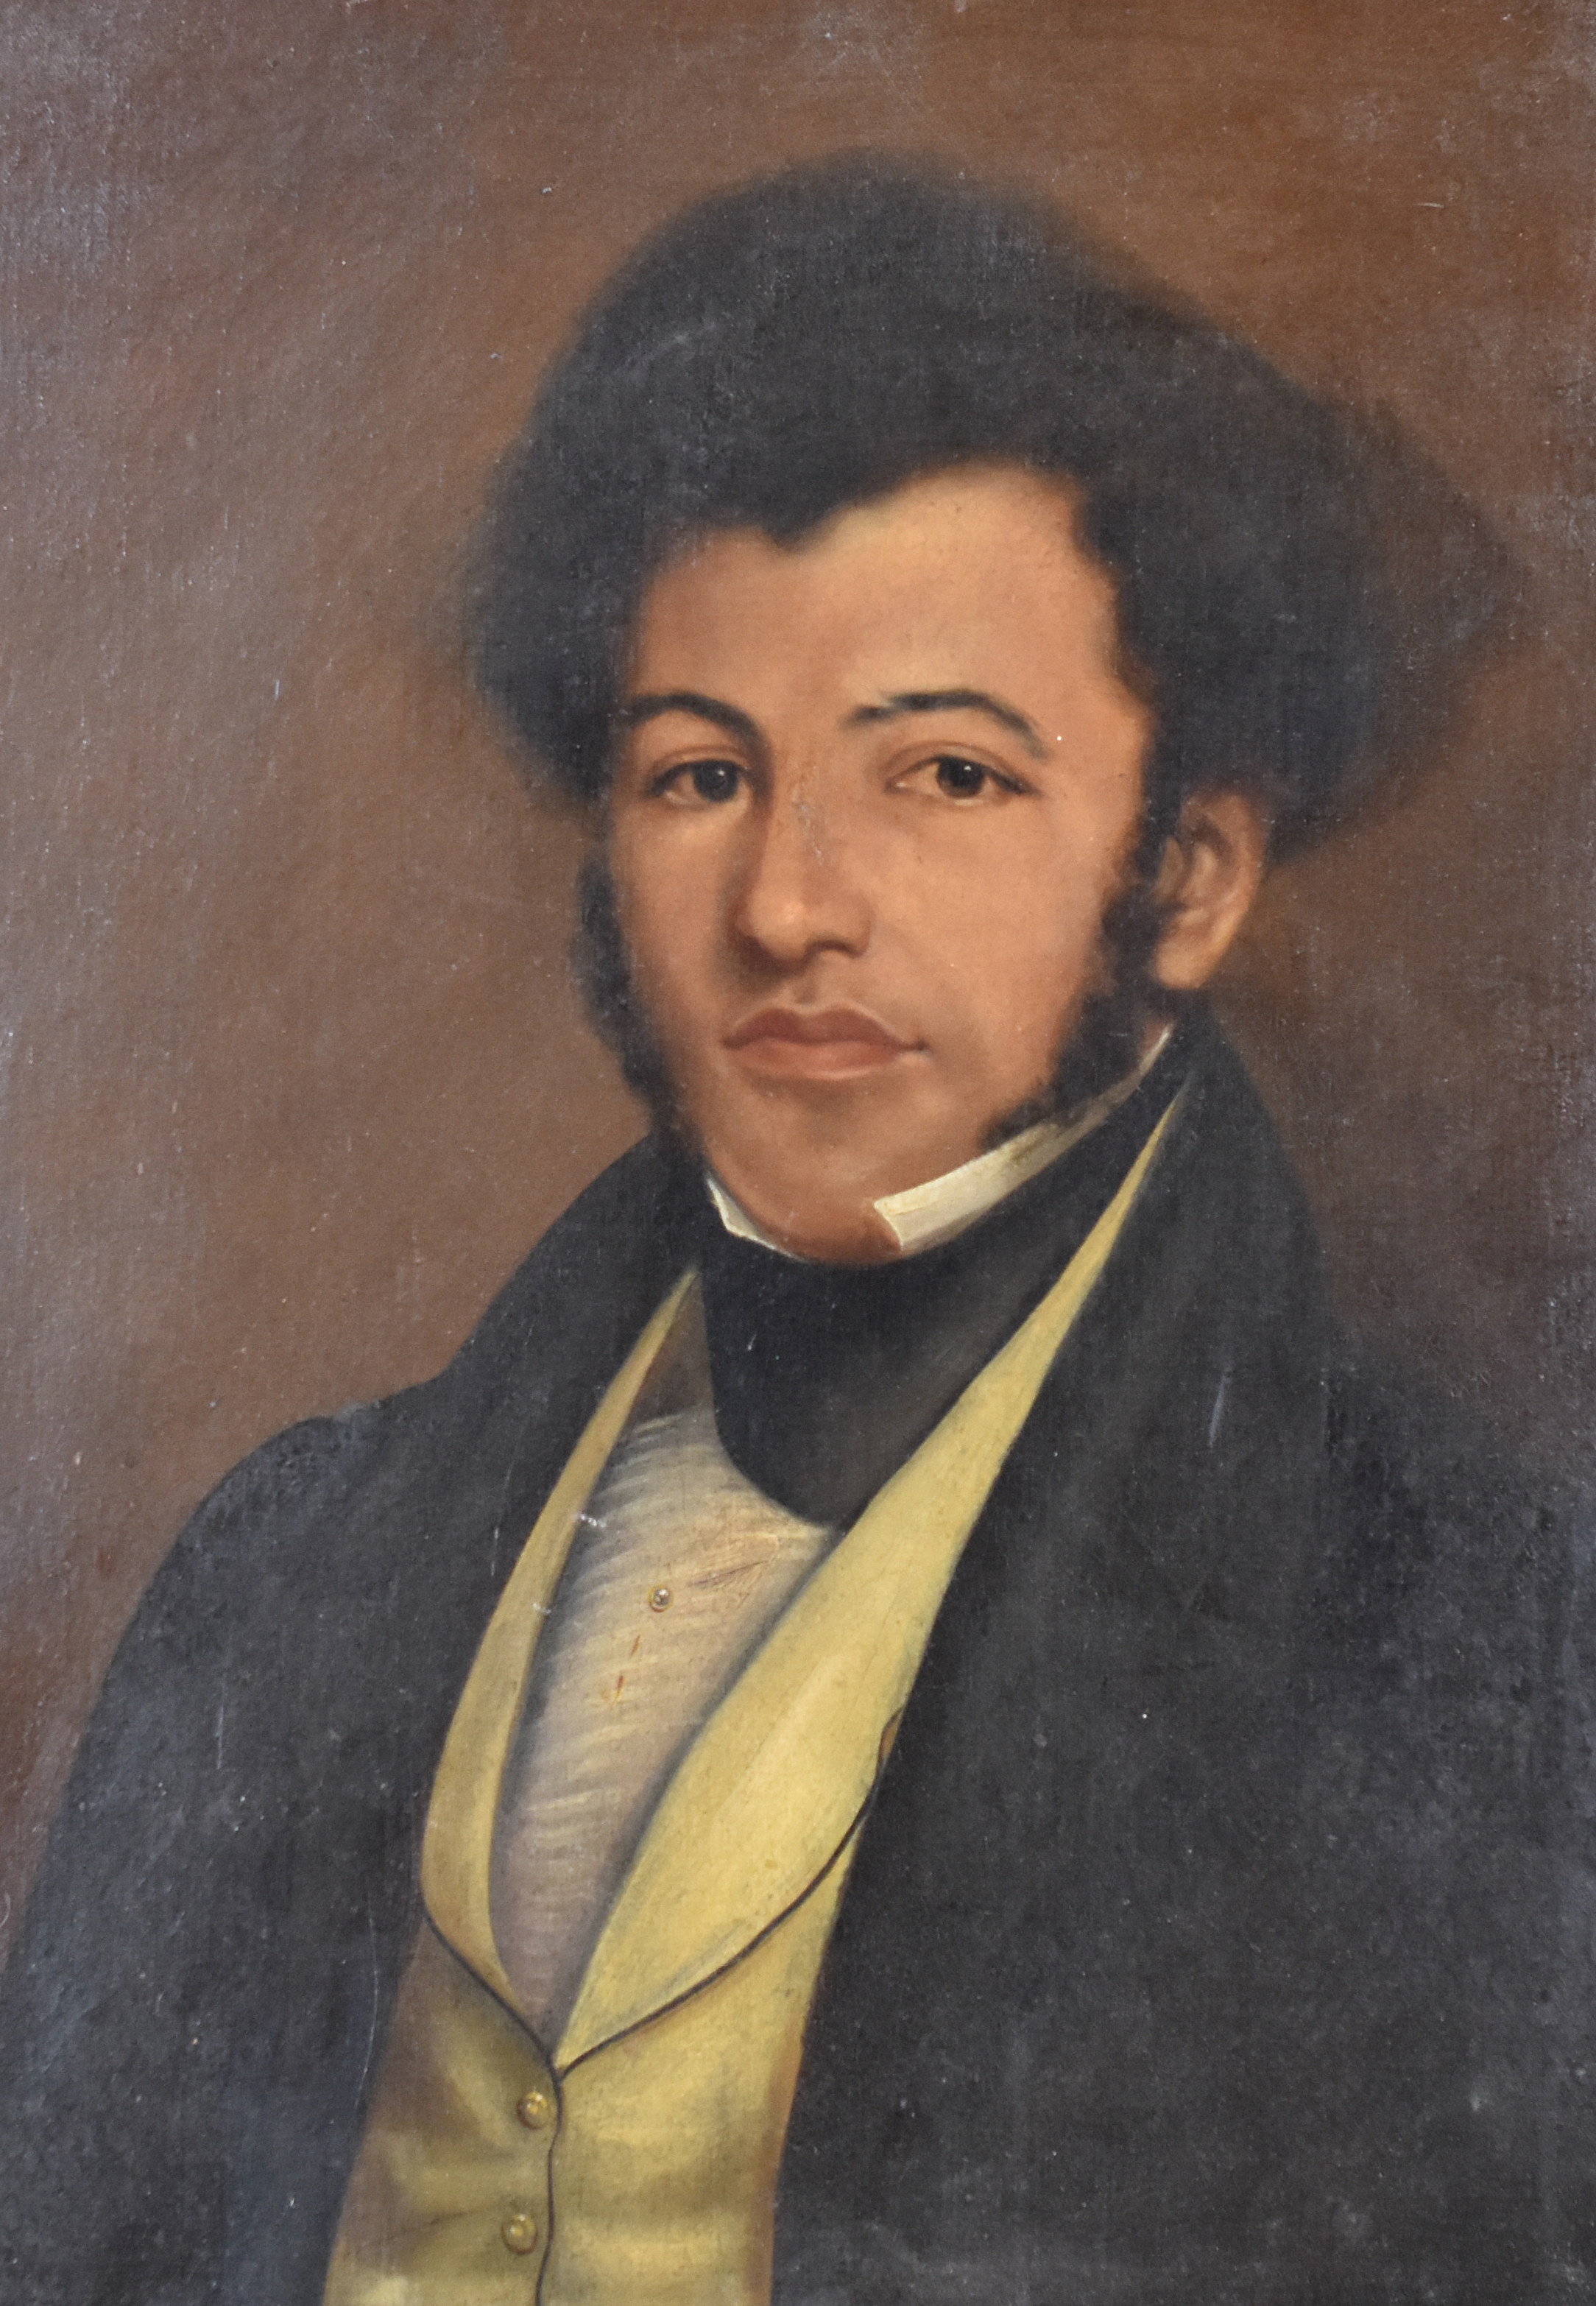 Lot 048: 19th c. American Portrait of an African American Gentleman